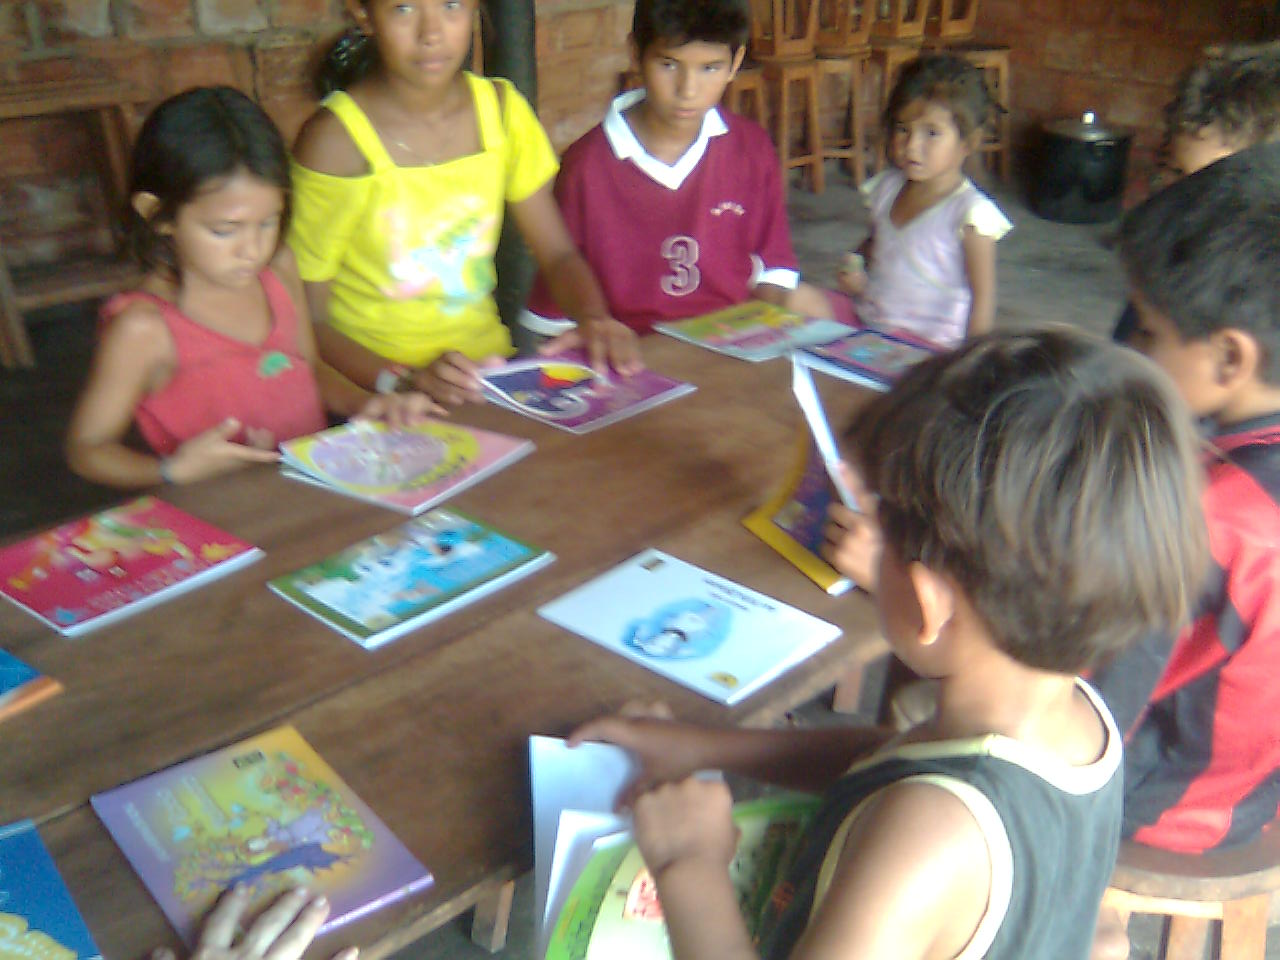 Taller de acercamiento a la literatura en Paraguarí|Taller ñe’ẽporãhaipyre mokyre’ỹrã Paraguarípe imagen